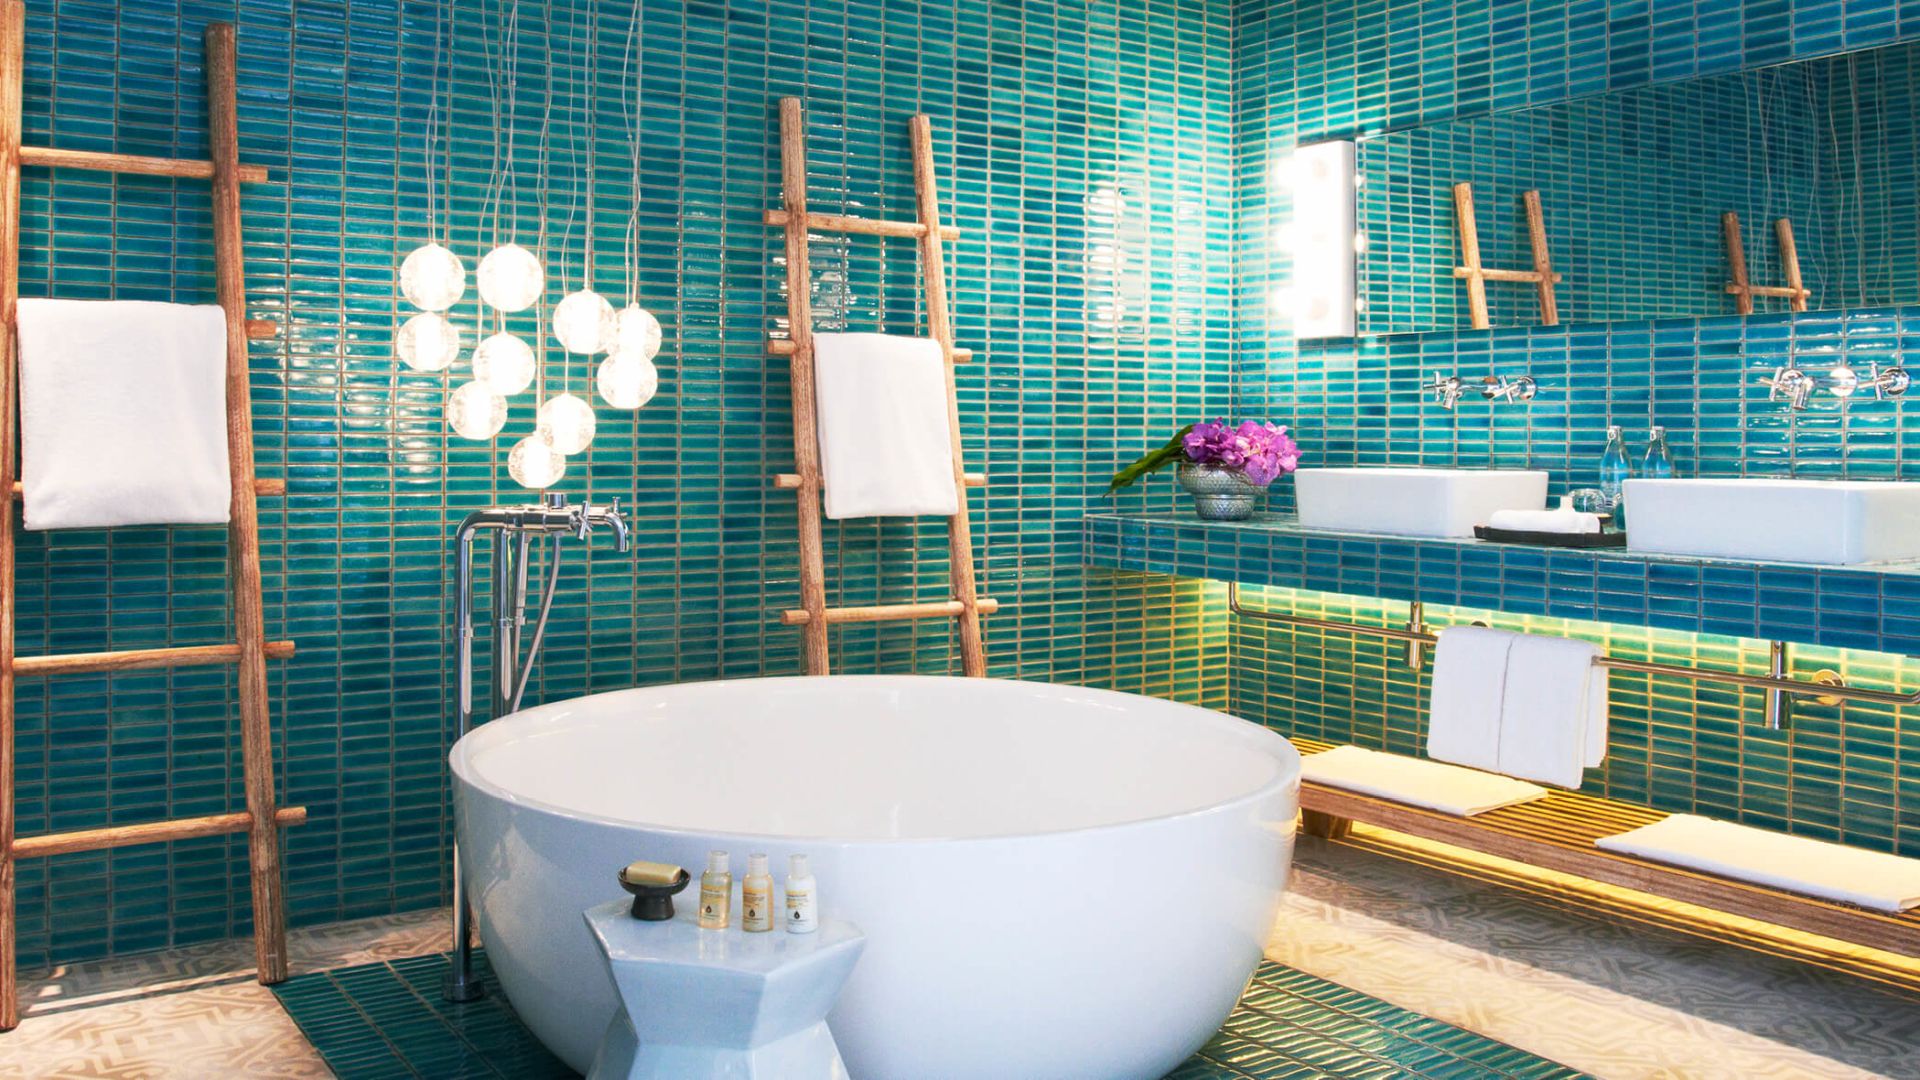 Bathtub with dual vanity sinks - Image